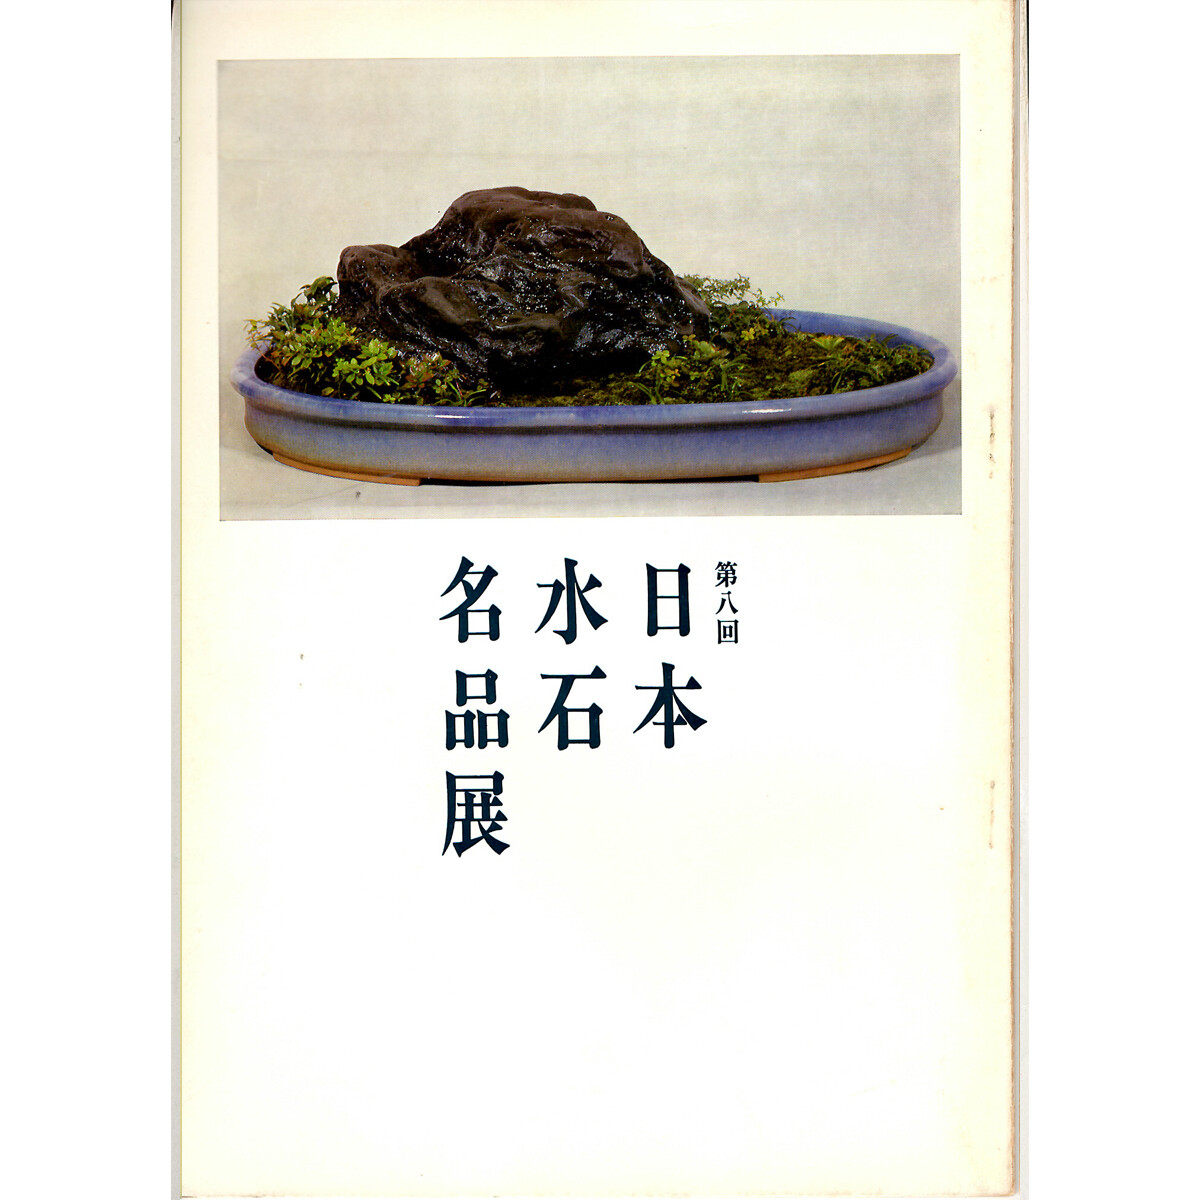 Meihentin, Exhibition of Japanese Suiseki Masterpieces 1968